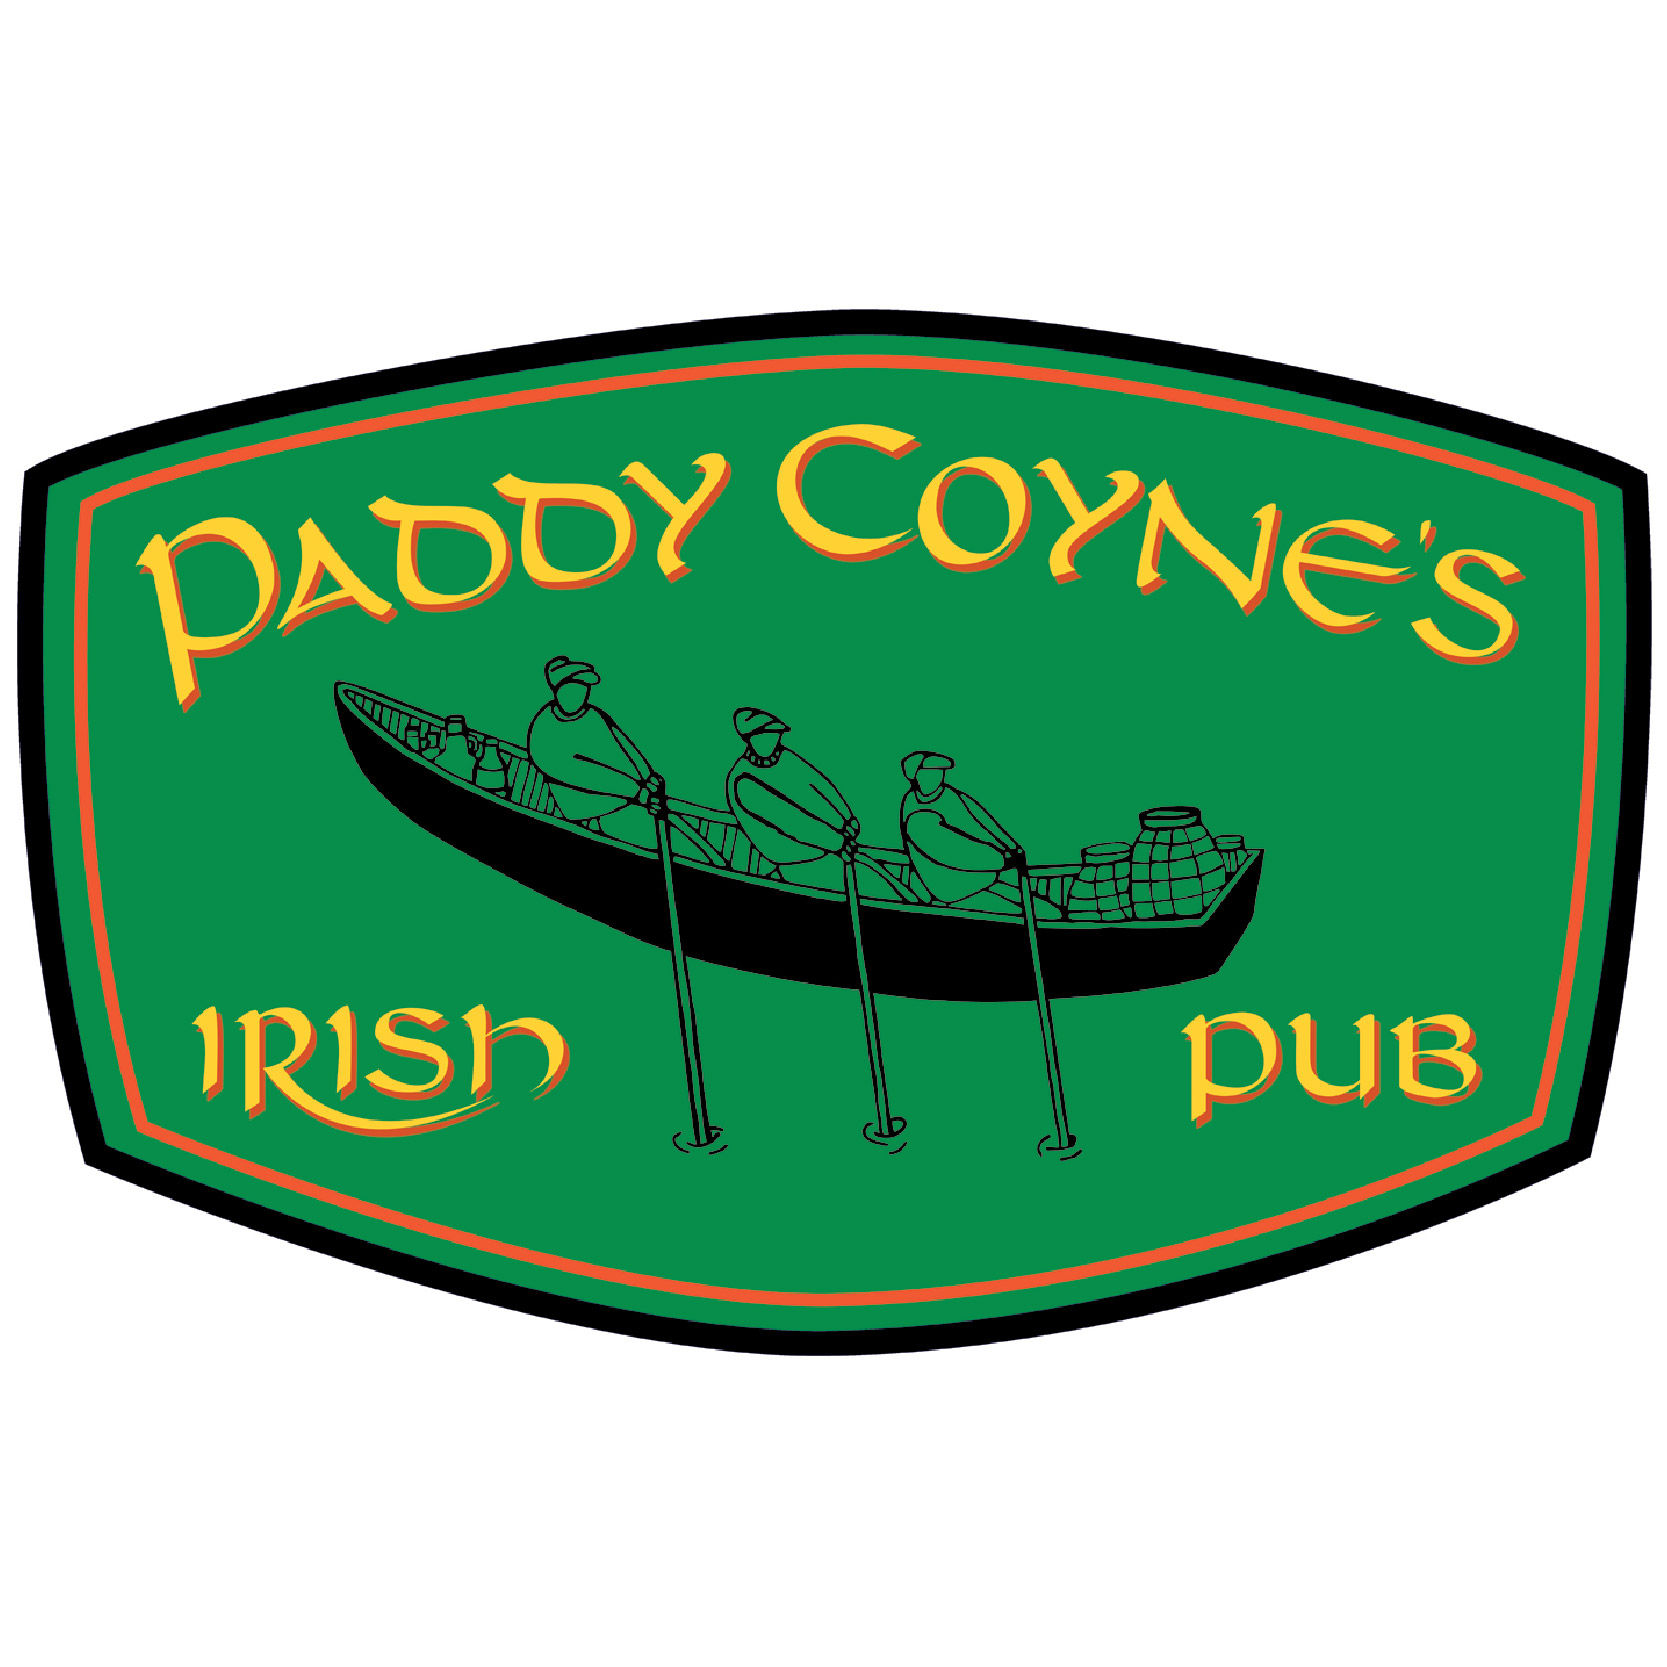 Paddy Coyne's